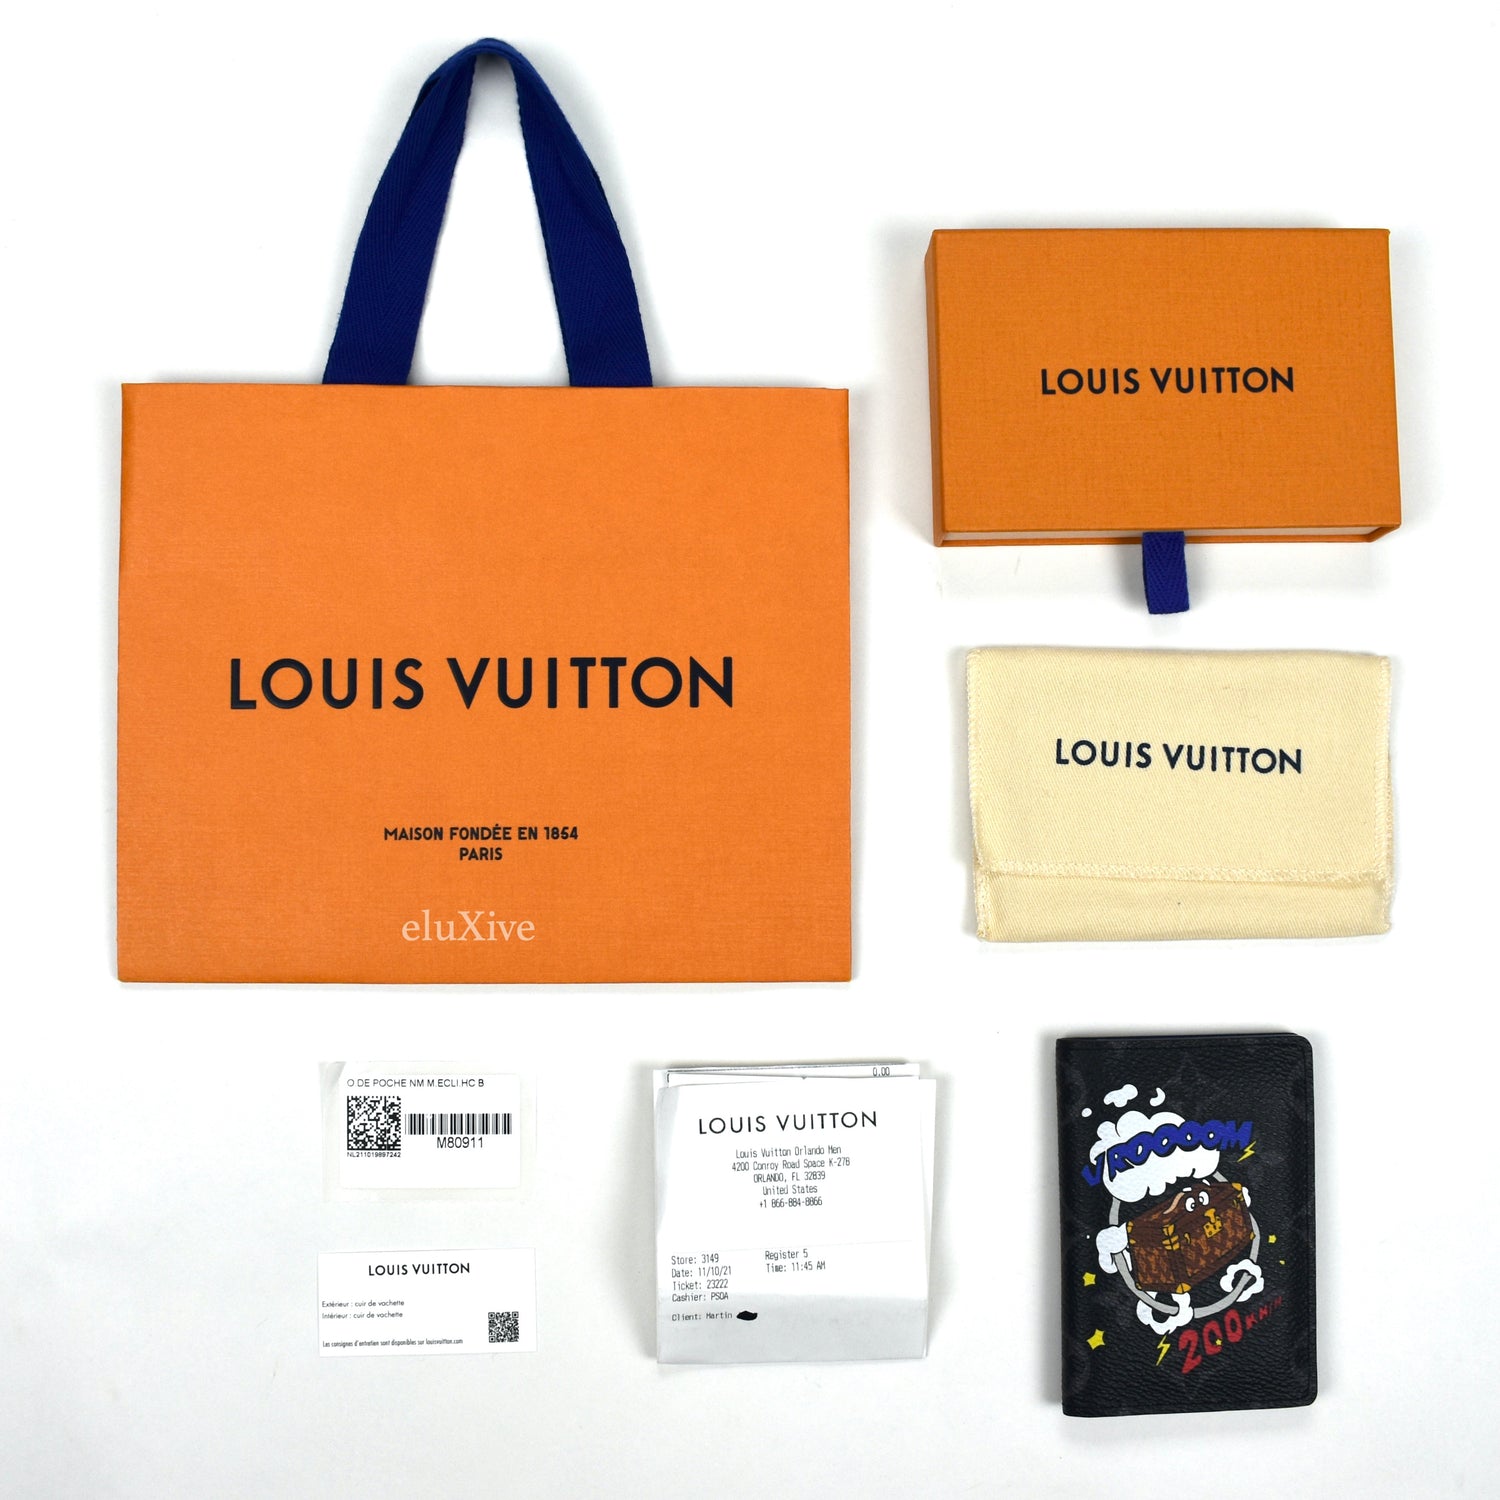 Louis Vuitton Locations & Hours Near Orlando, Fl